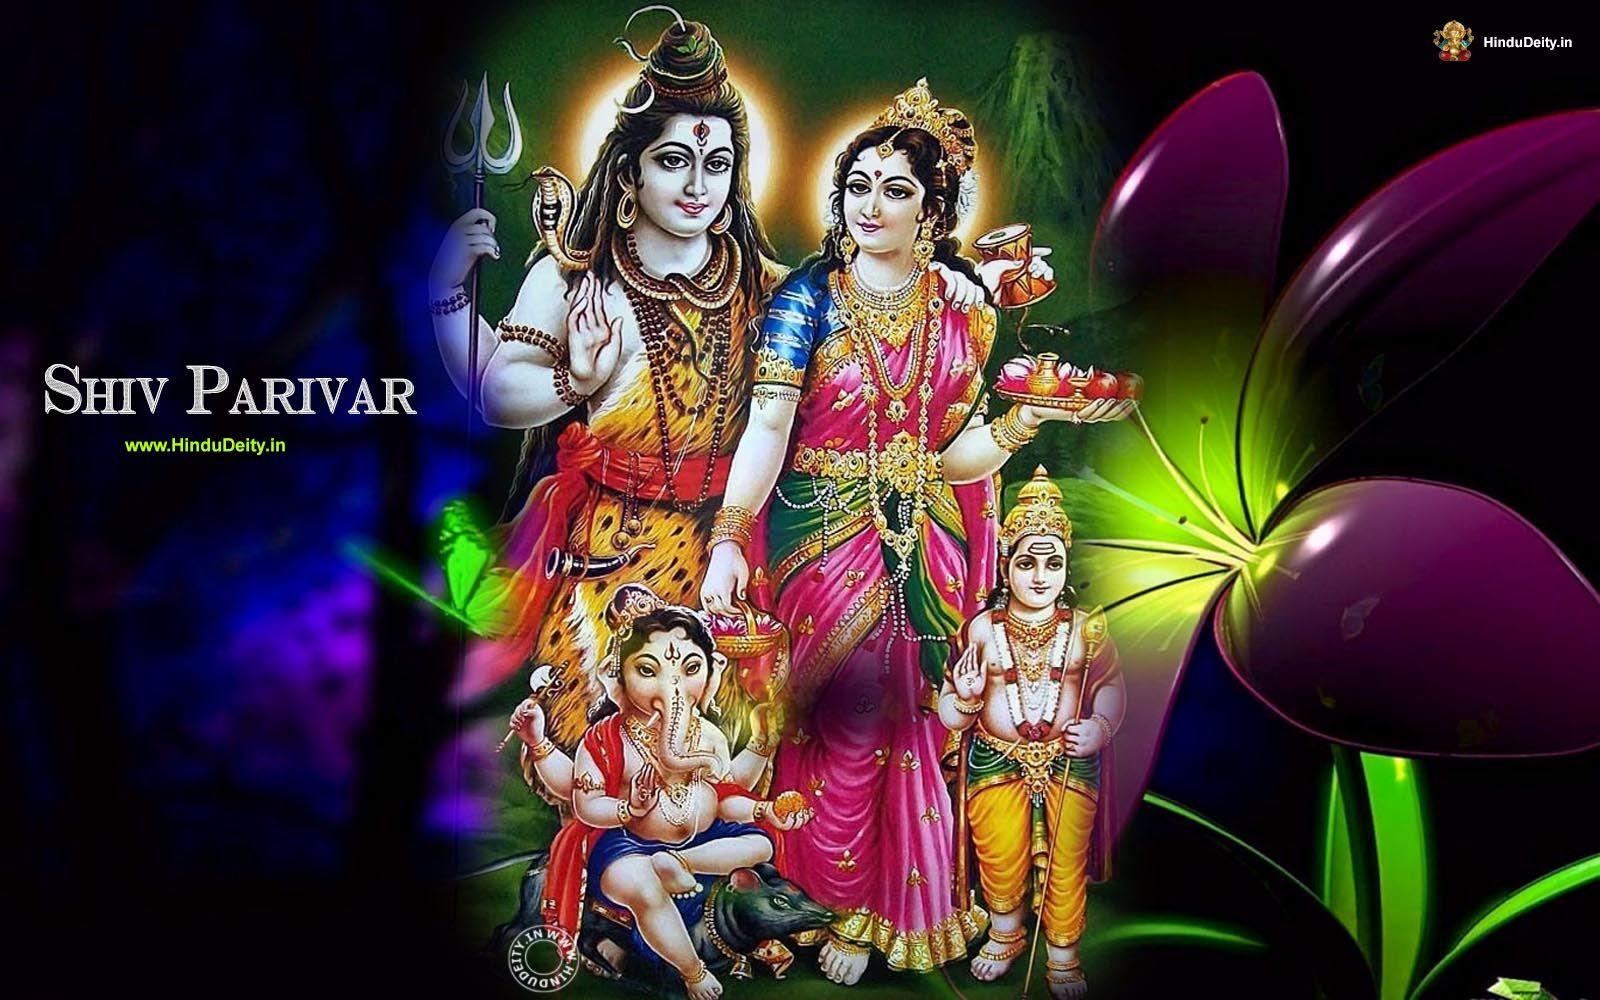 Free Download Shiv Parivar Wallpaper, Image & Photo